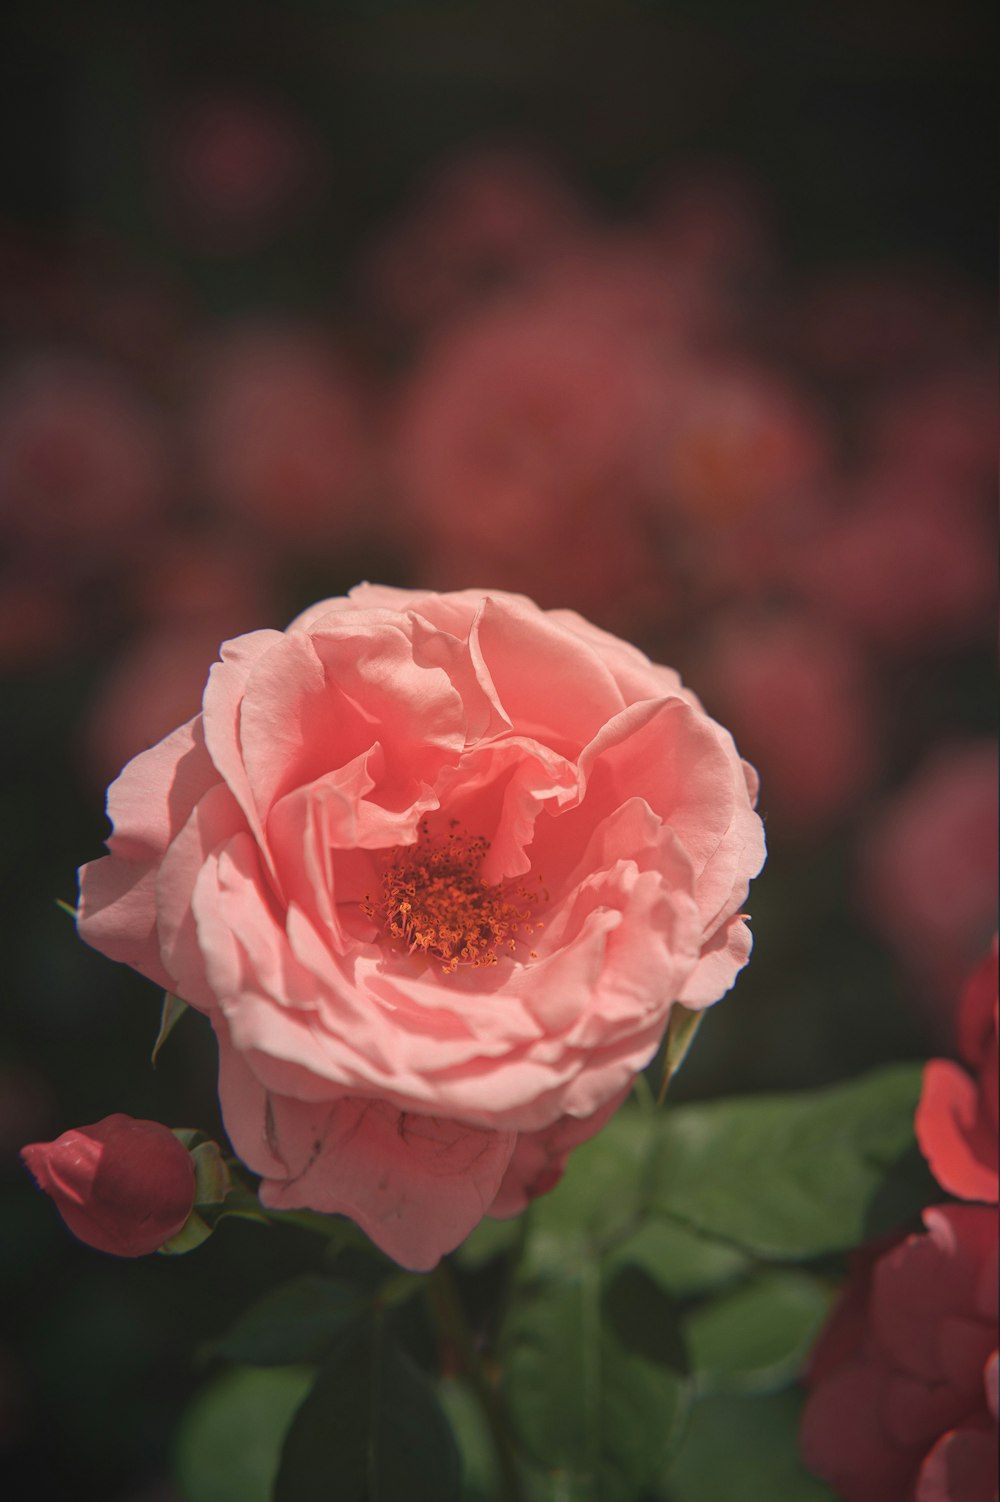 blooming pink rose flower